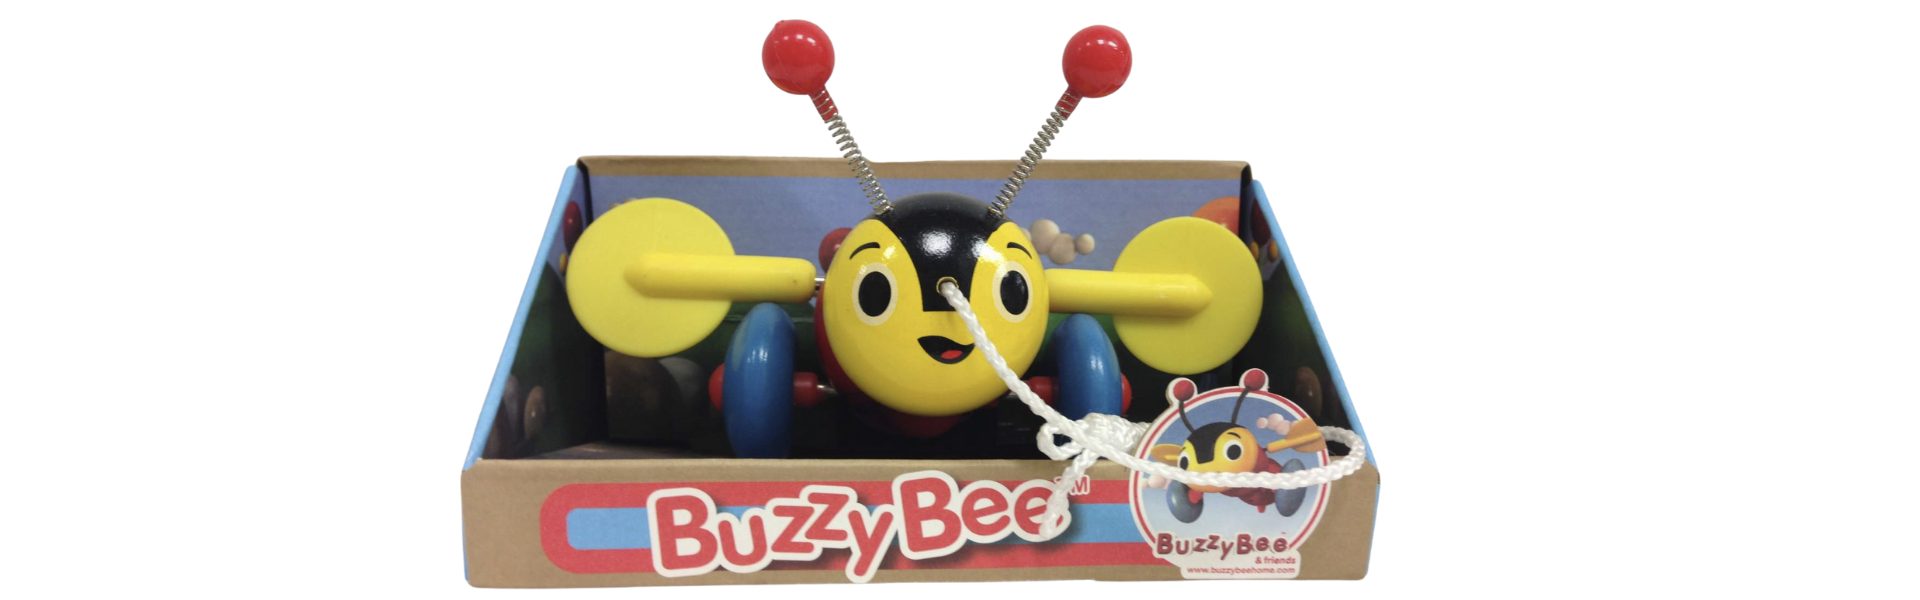 NZ Buzzy Bee